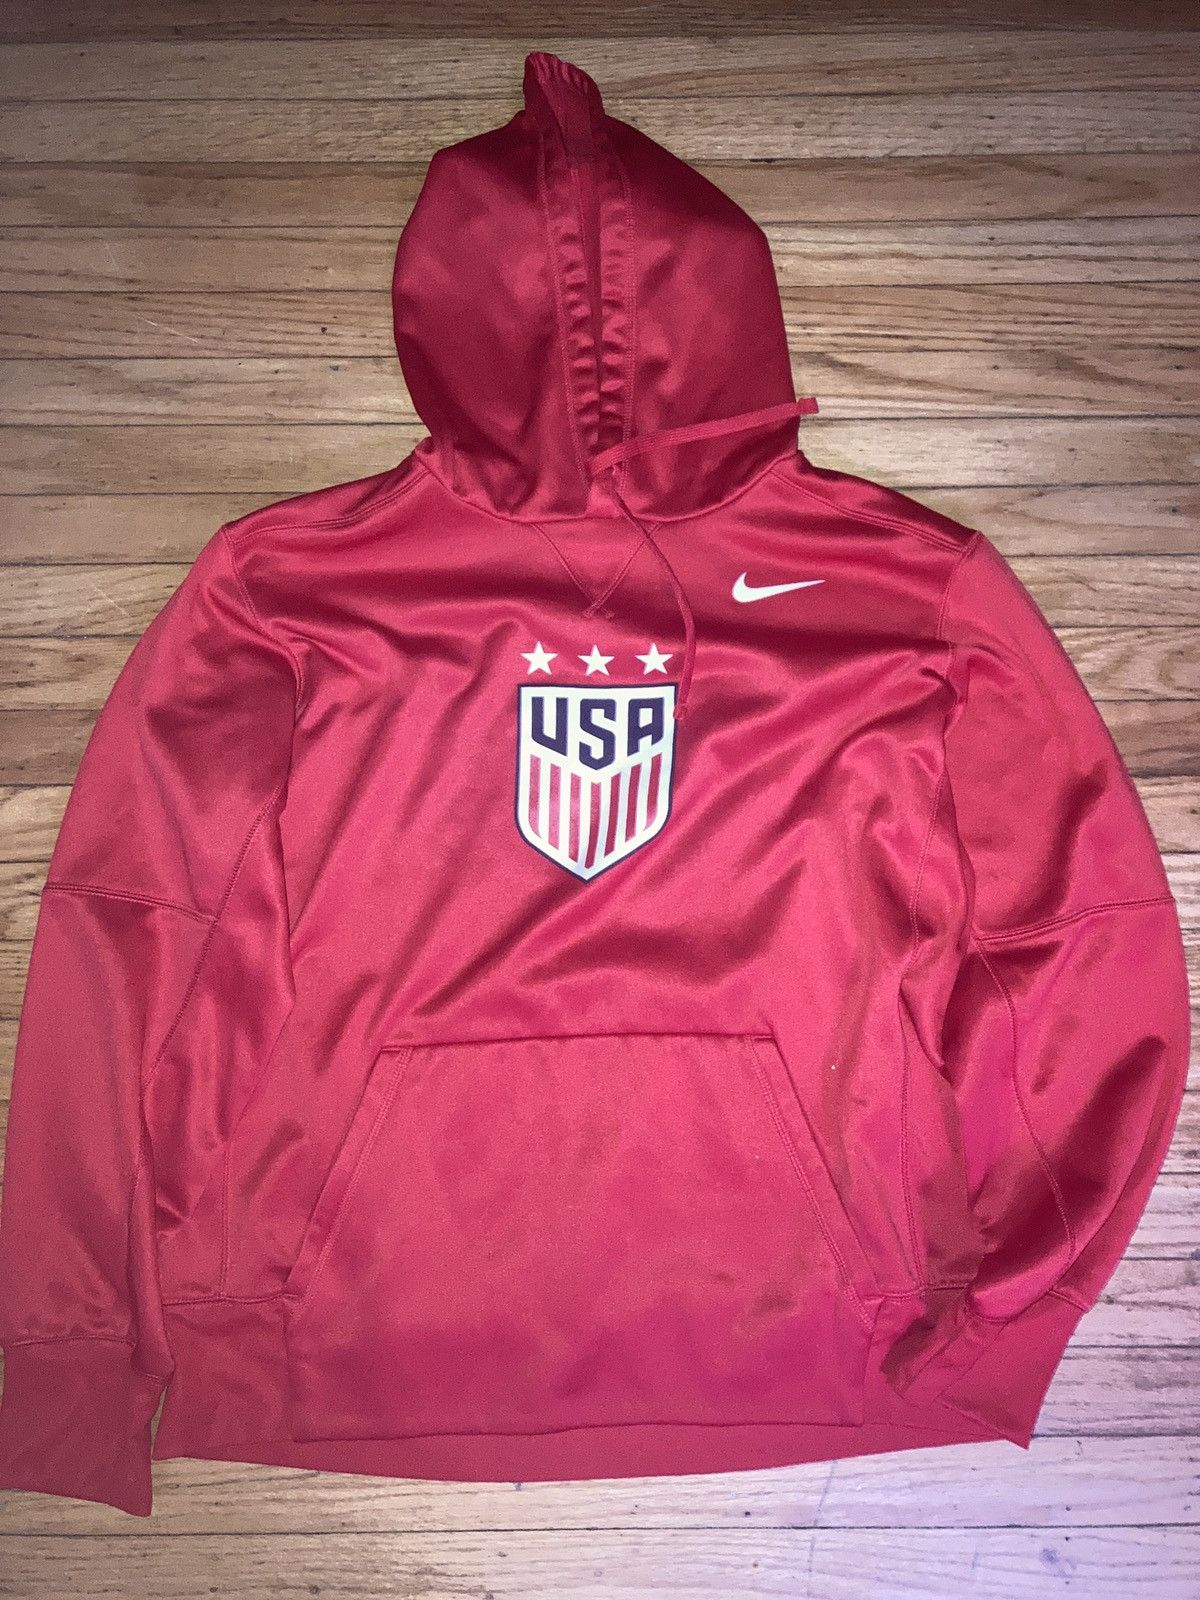 Nike Nike ( team USA ) hoodie 🌎 Size US L / EU 52-54 / 3 - 1 Preview